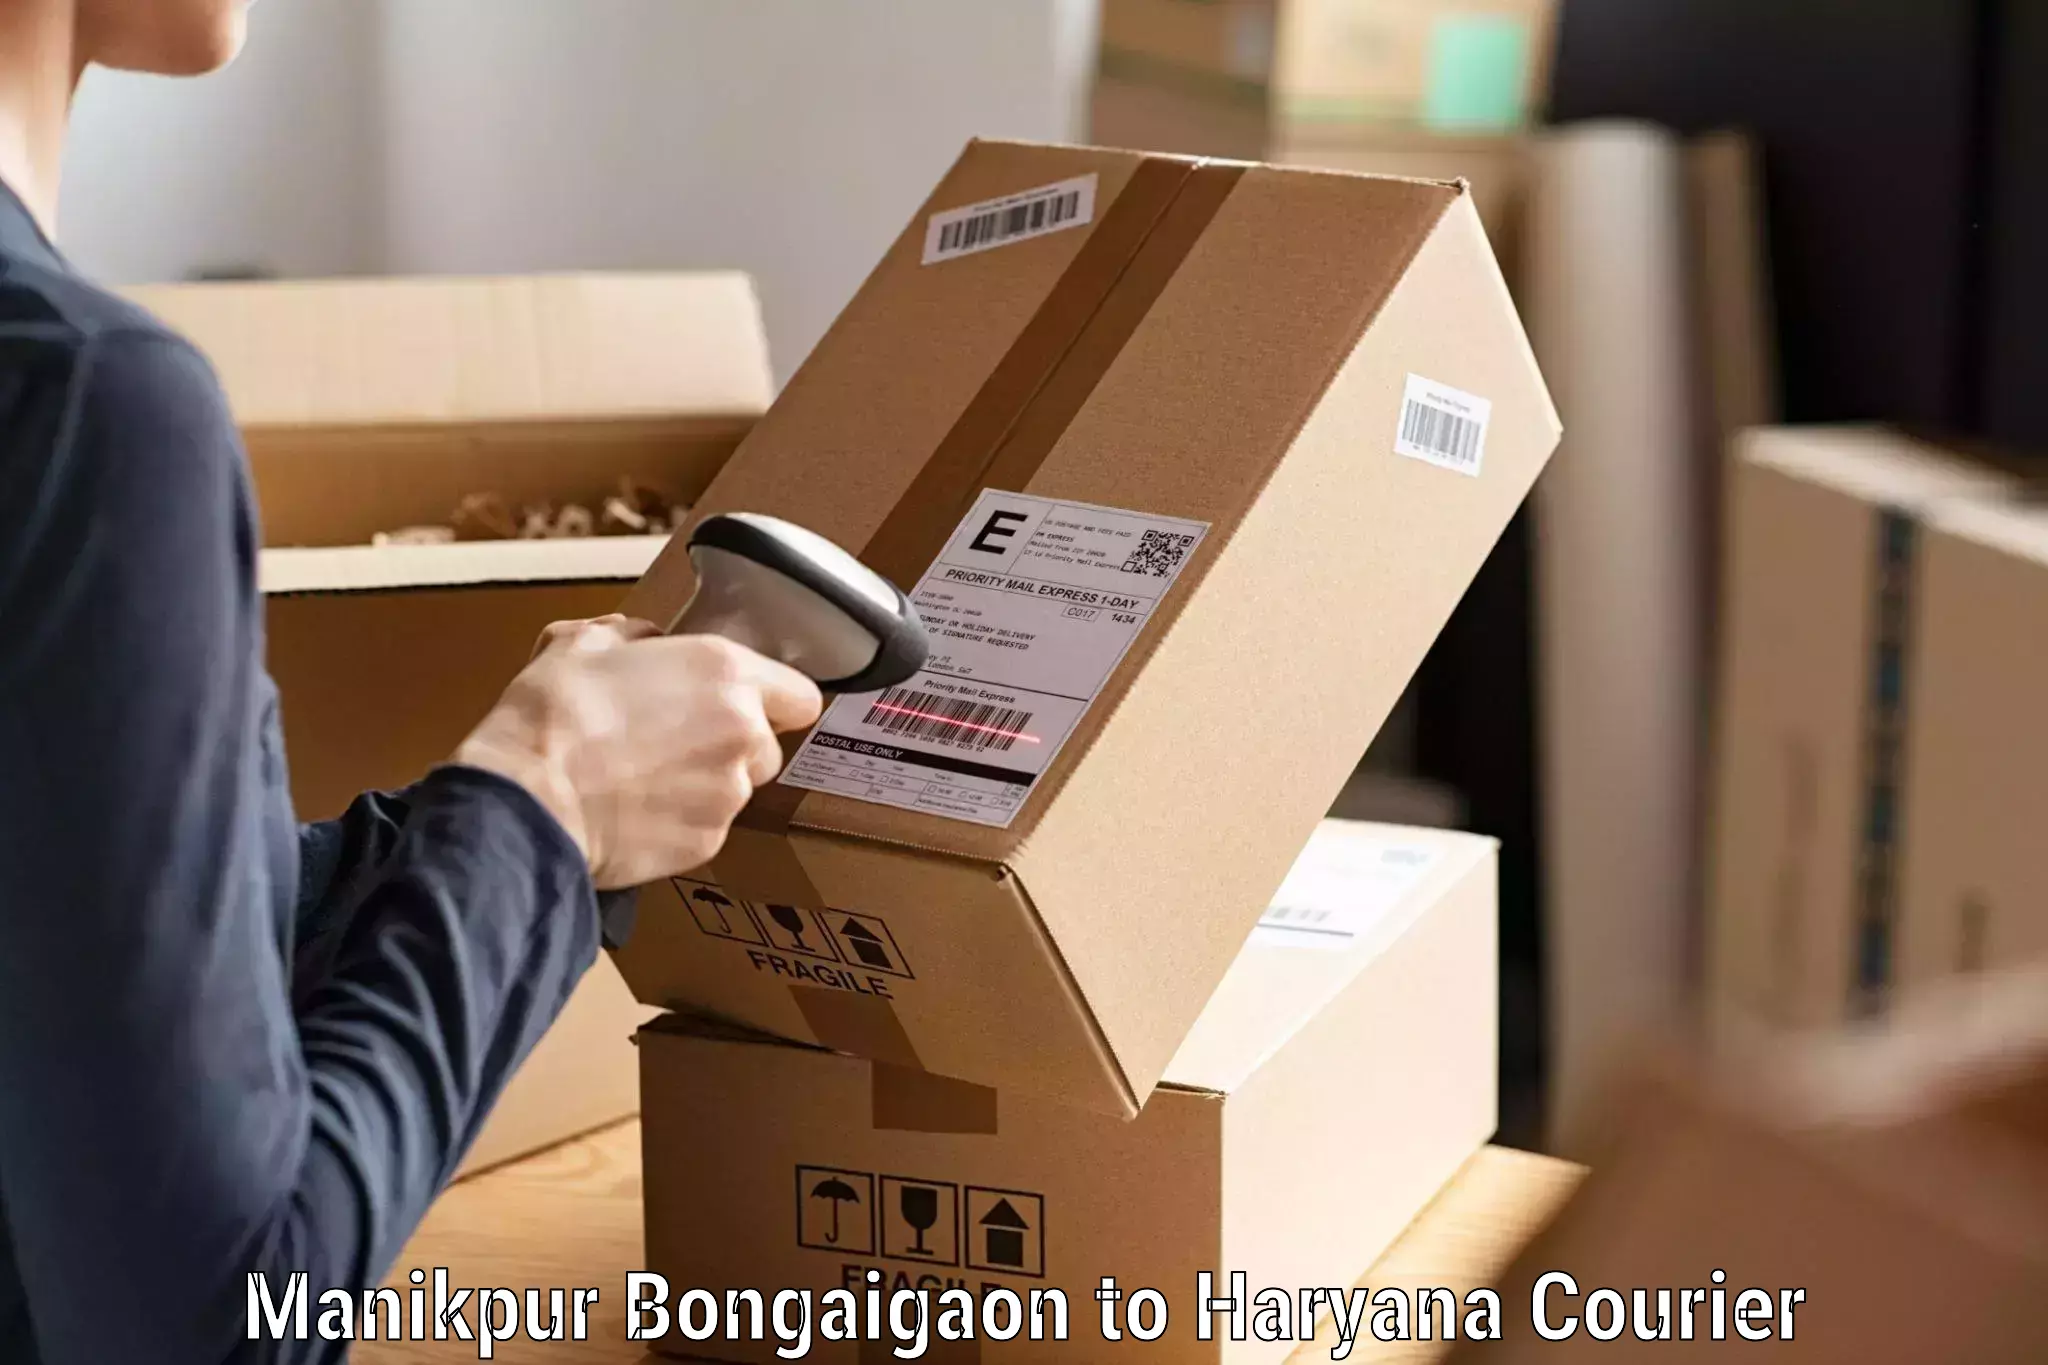 Lightweight parcel options Manikpur Bongaigaon to Haryana